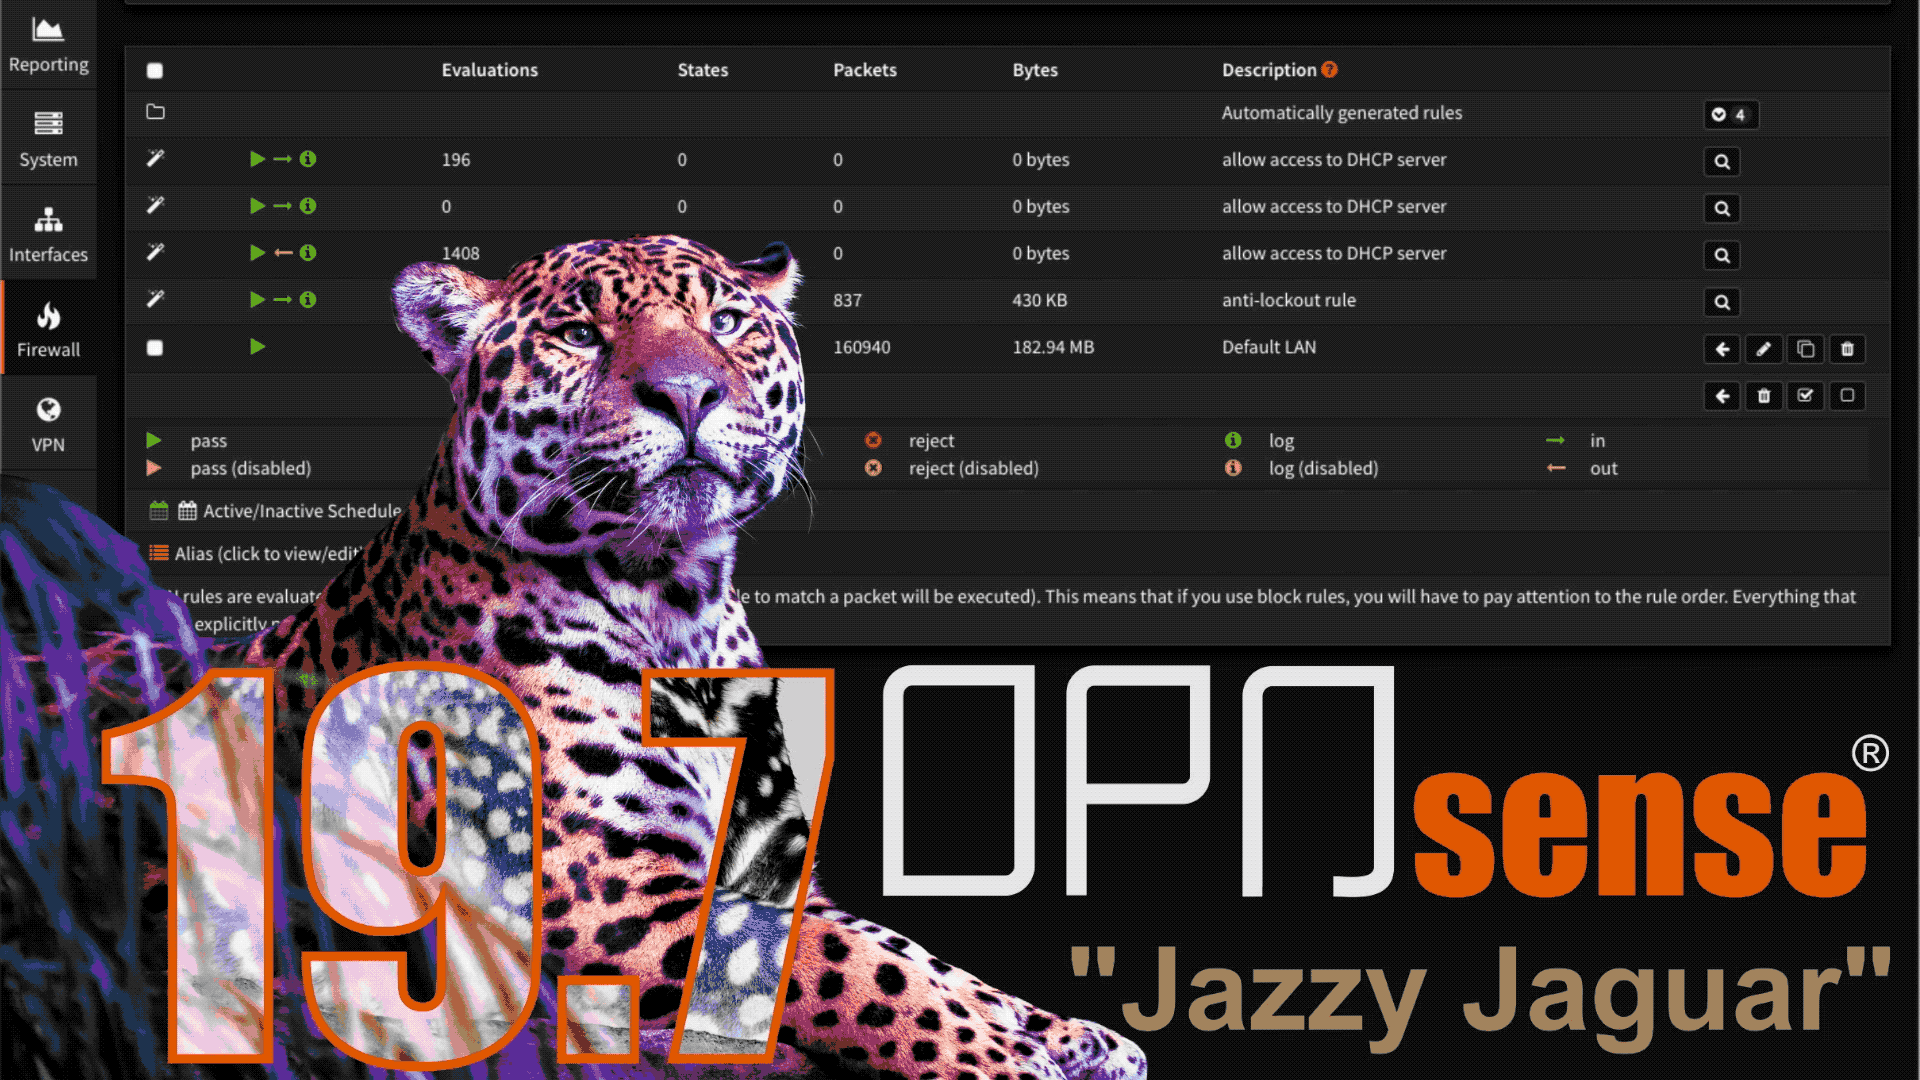 OPNsense_19_7_Jazzy_Jaguar.2019-07-17 09_51_17